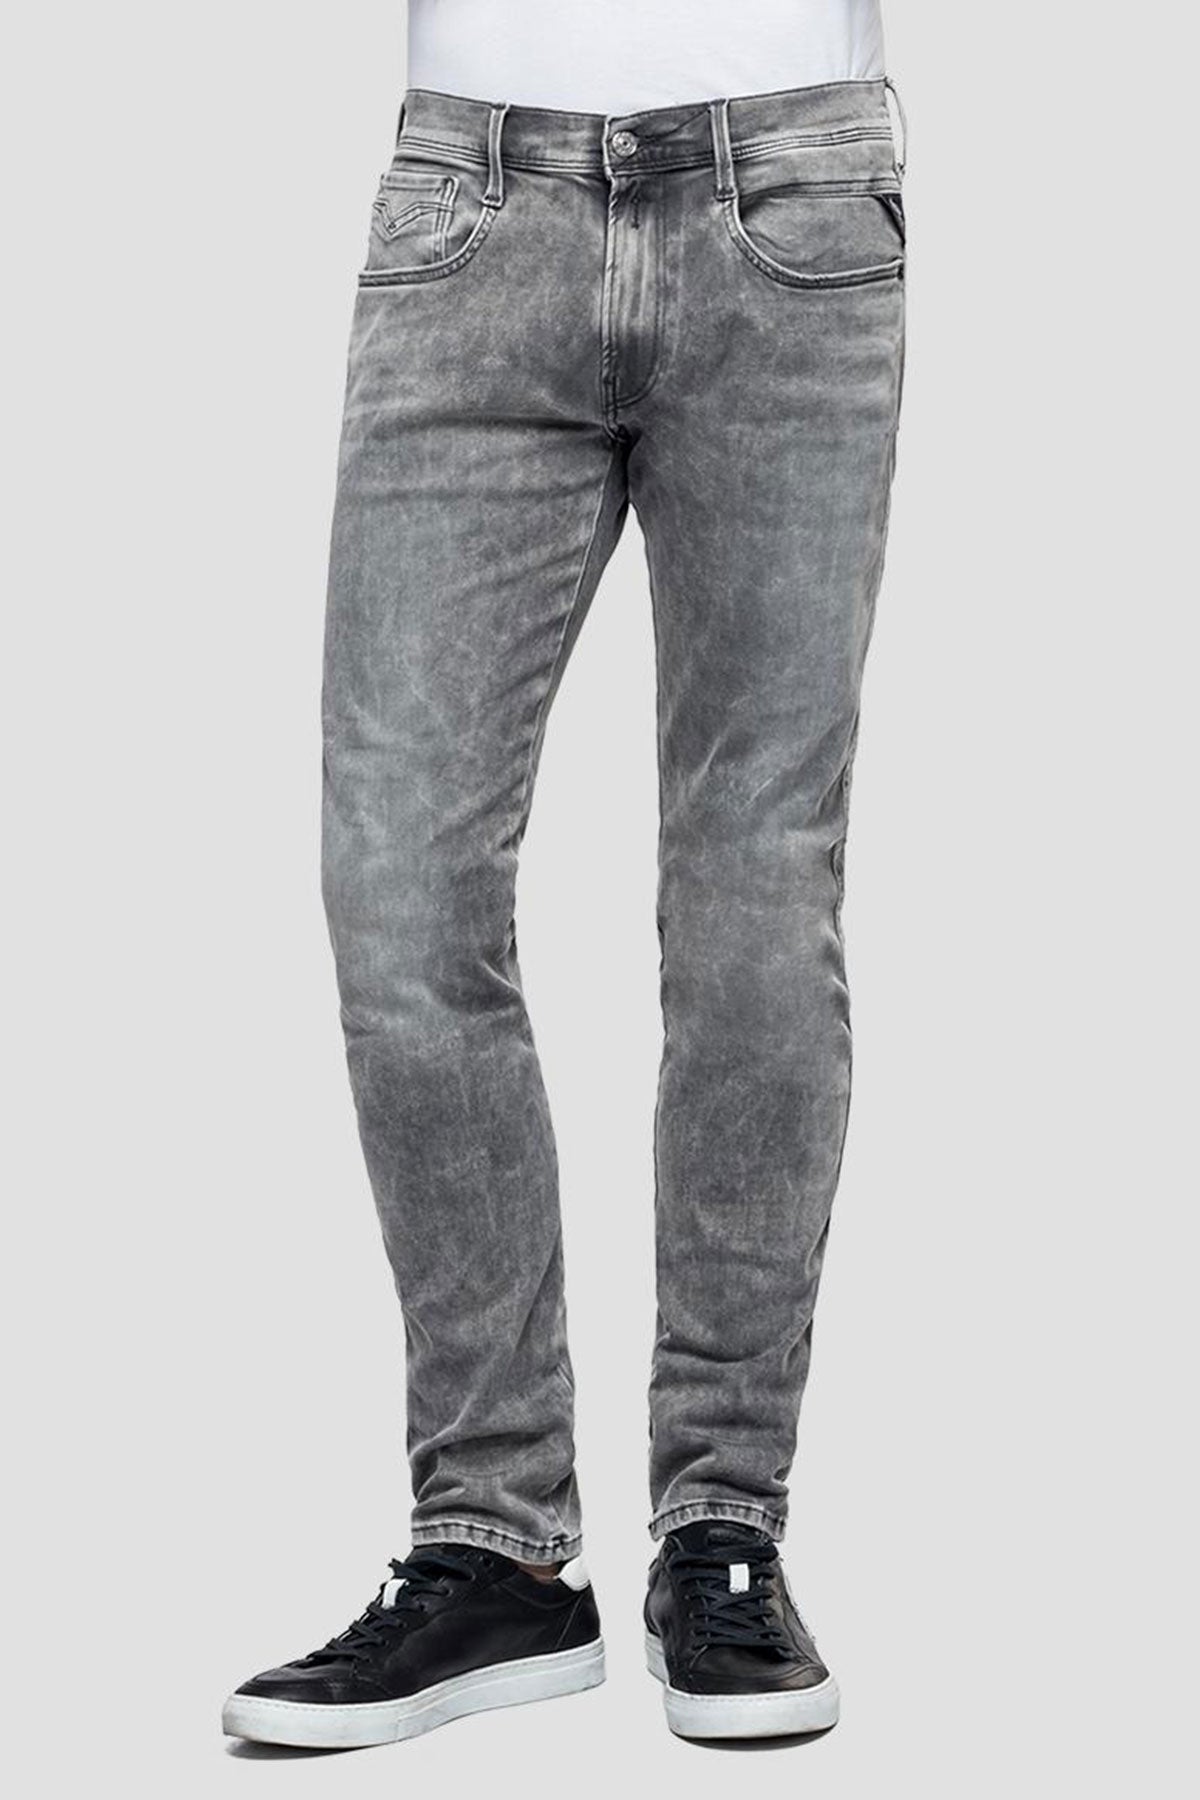 Replay Hyperflex Anbass Slim Fit Jeans-Libas Trendy Fashion Store